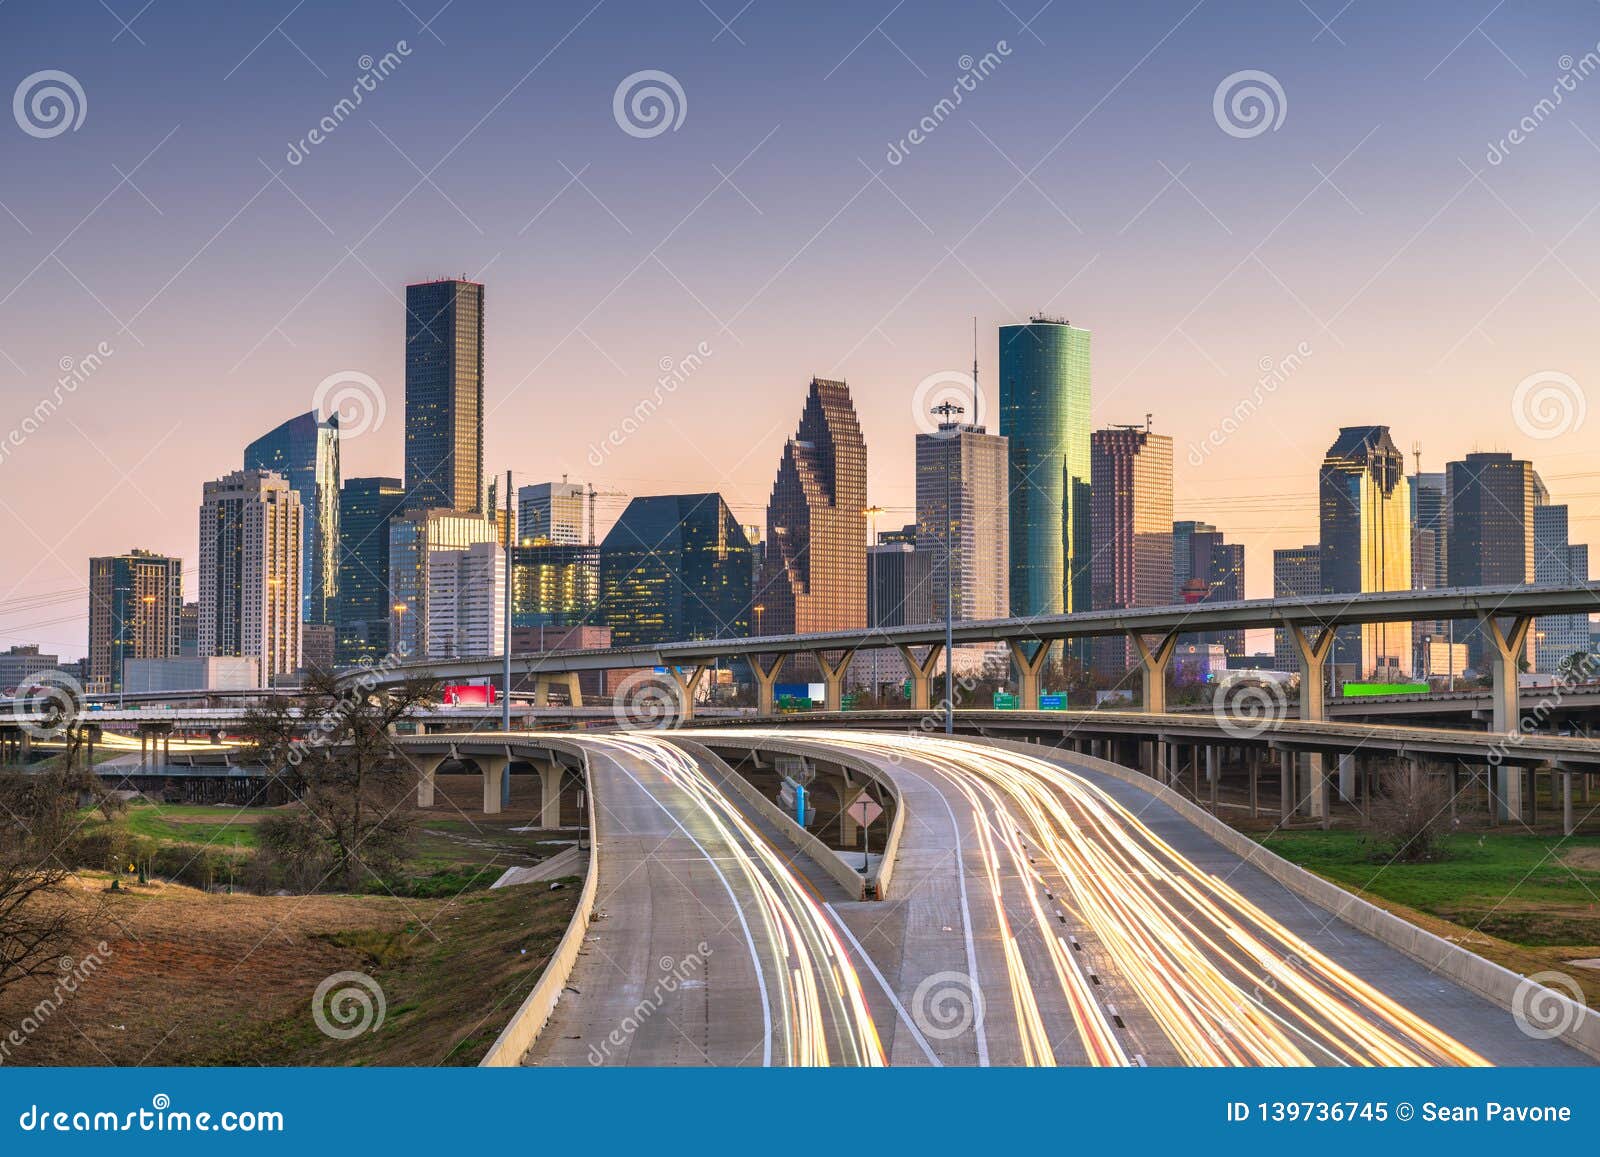 houston, texas, usa downtown city skyline and highway